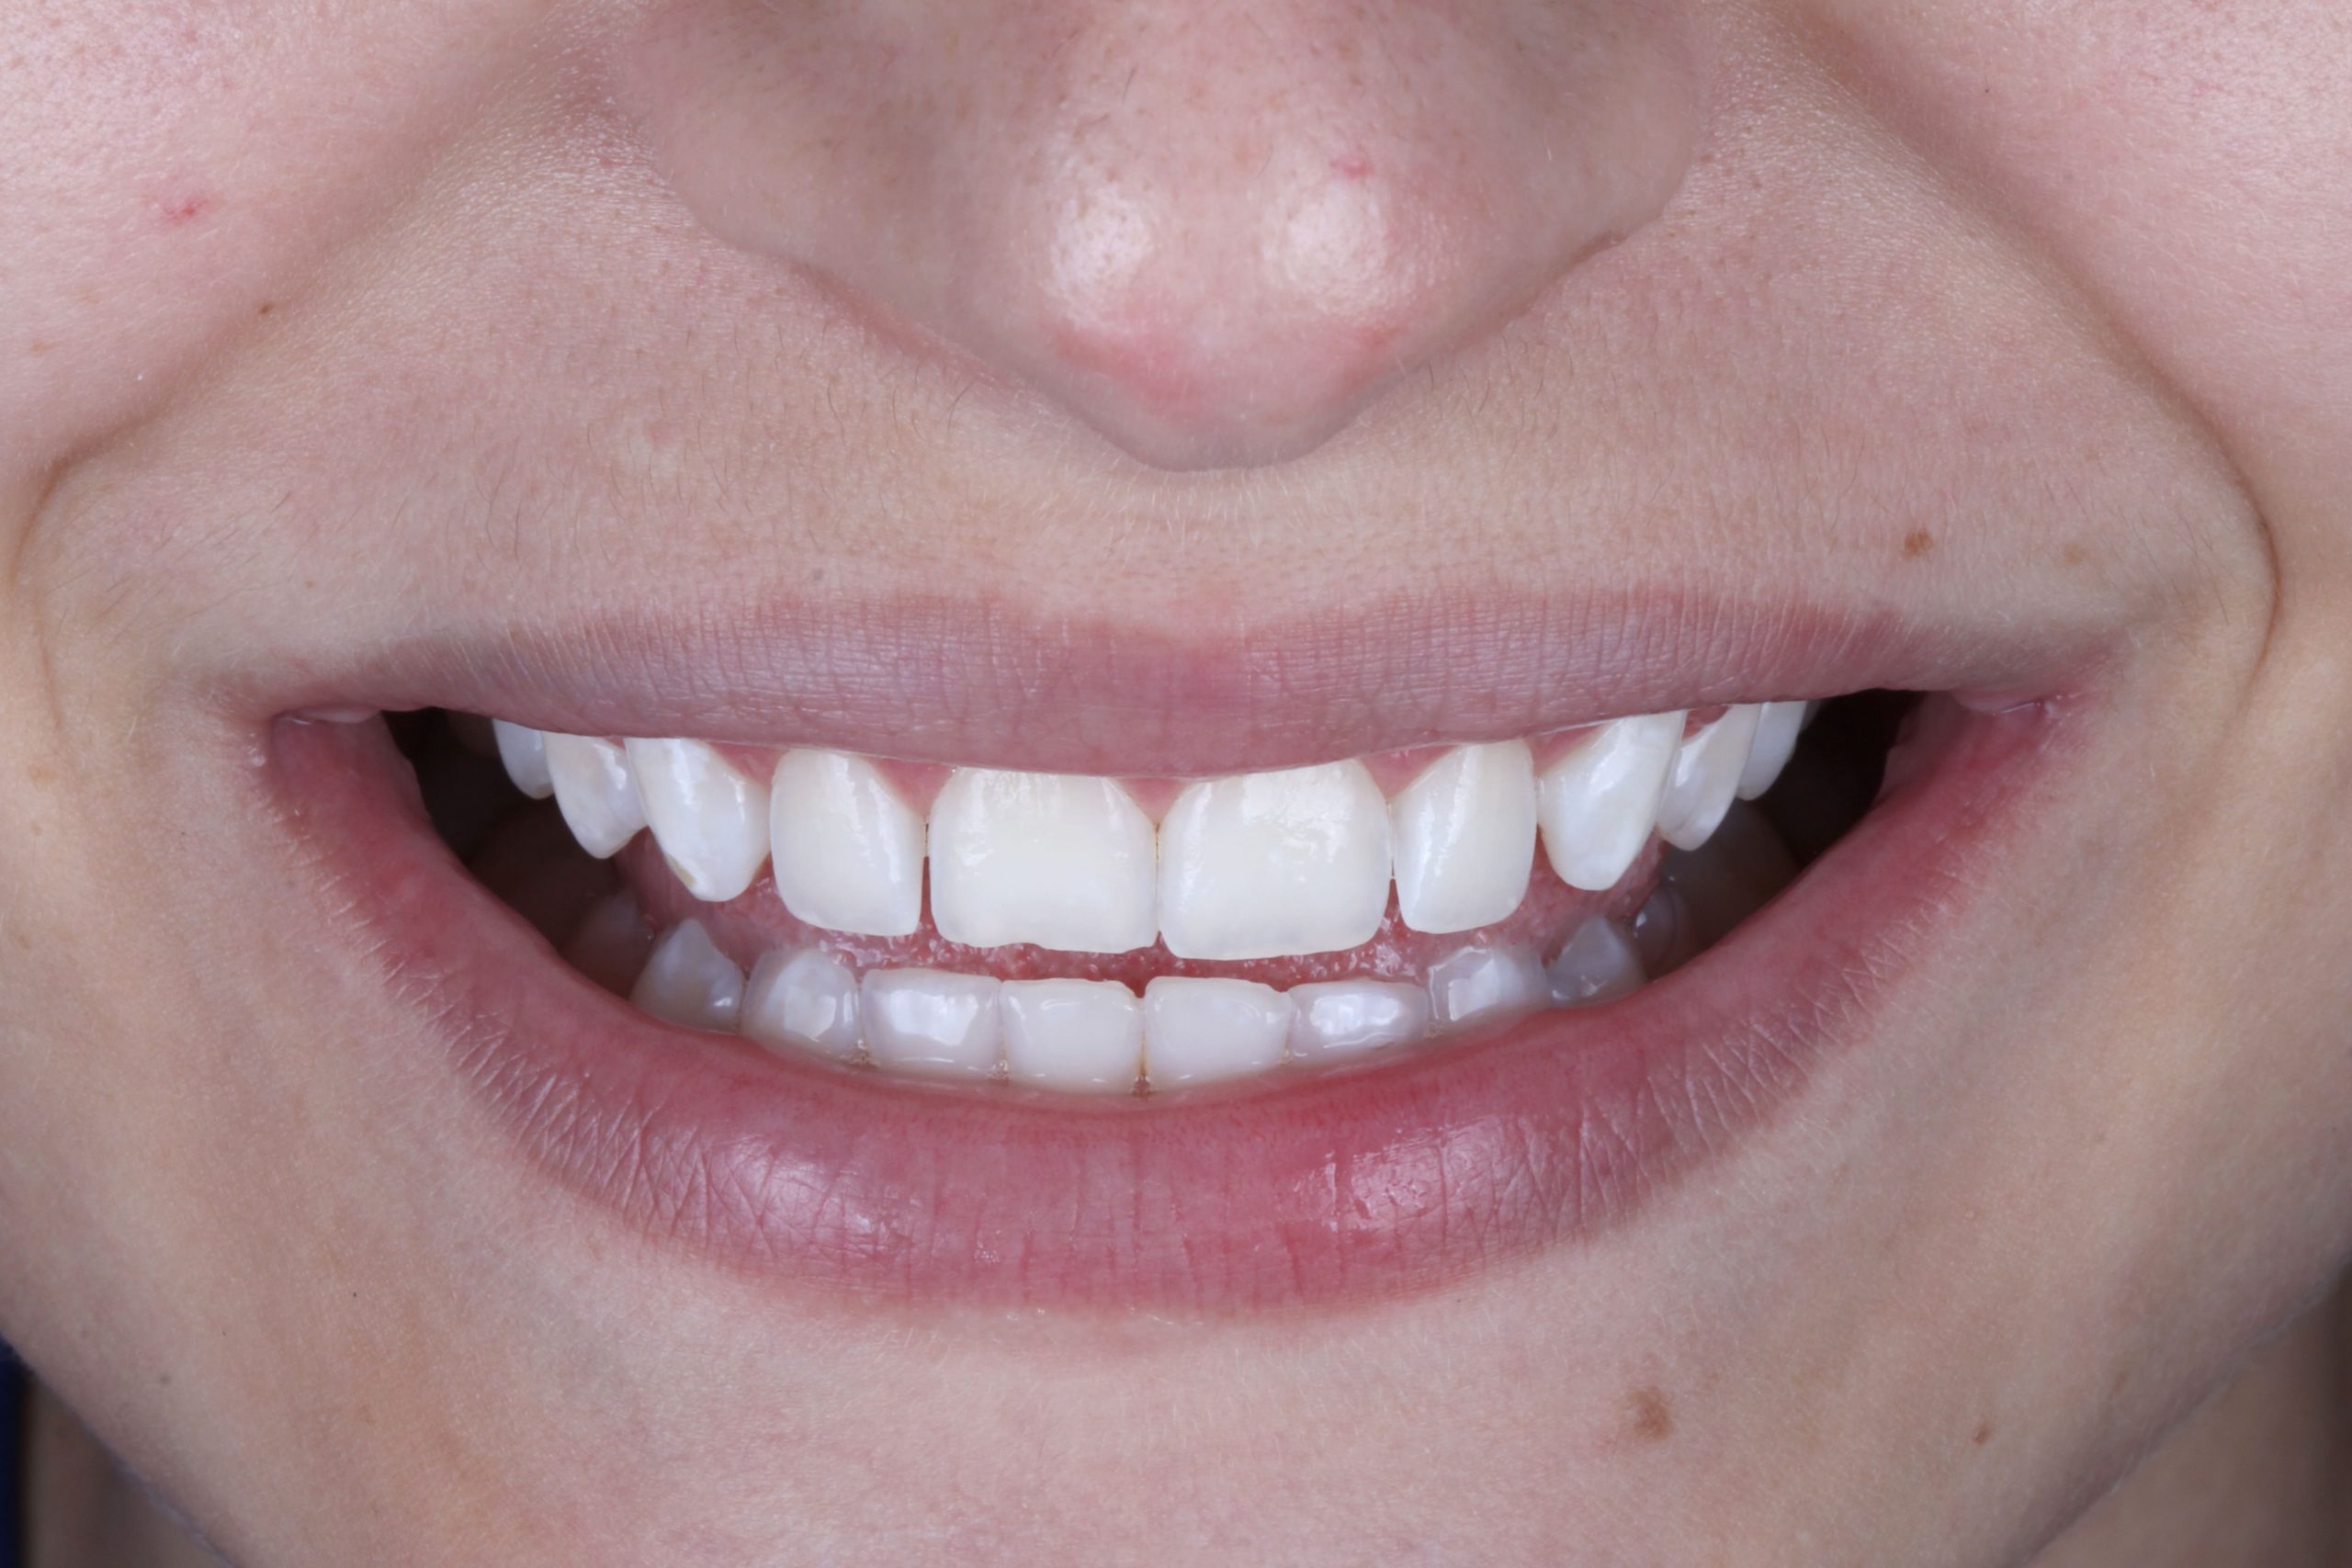 sorriso final da paciente sem a fluorose dental